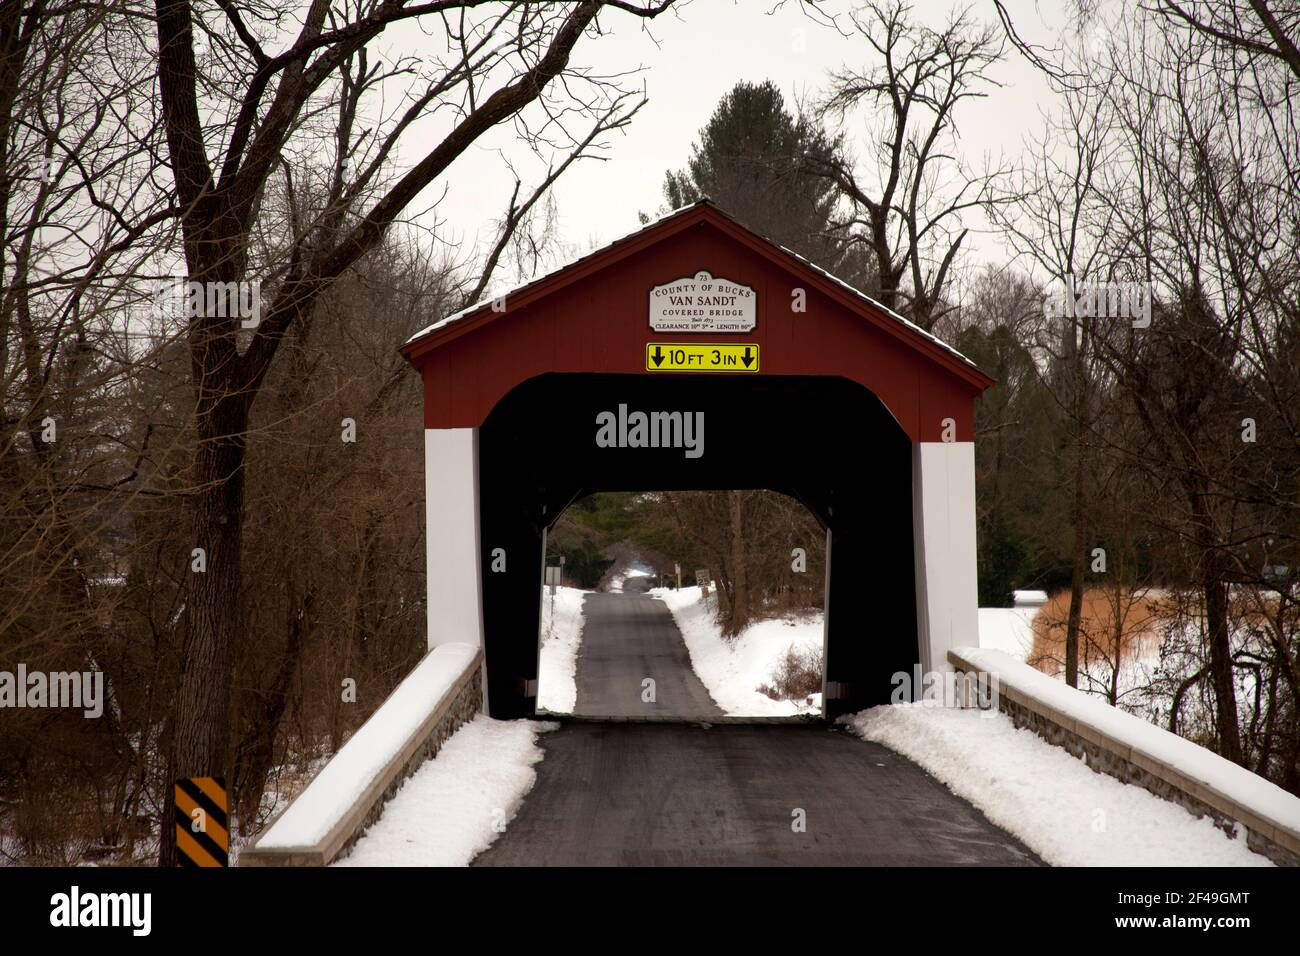 Van Sandt Covered Bridge, Bucks County, Pennsylvania, USA. Stock Photo